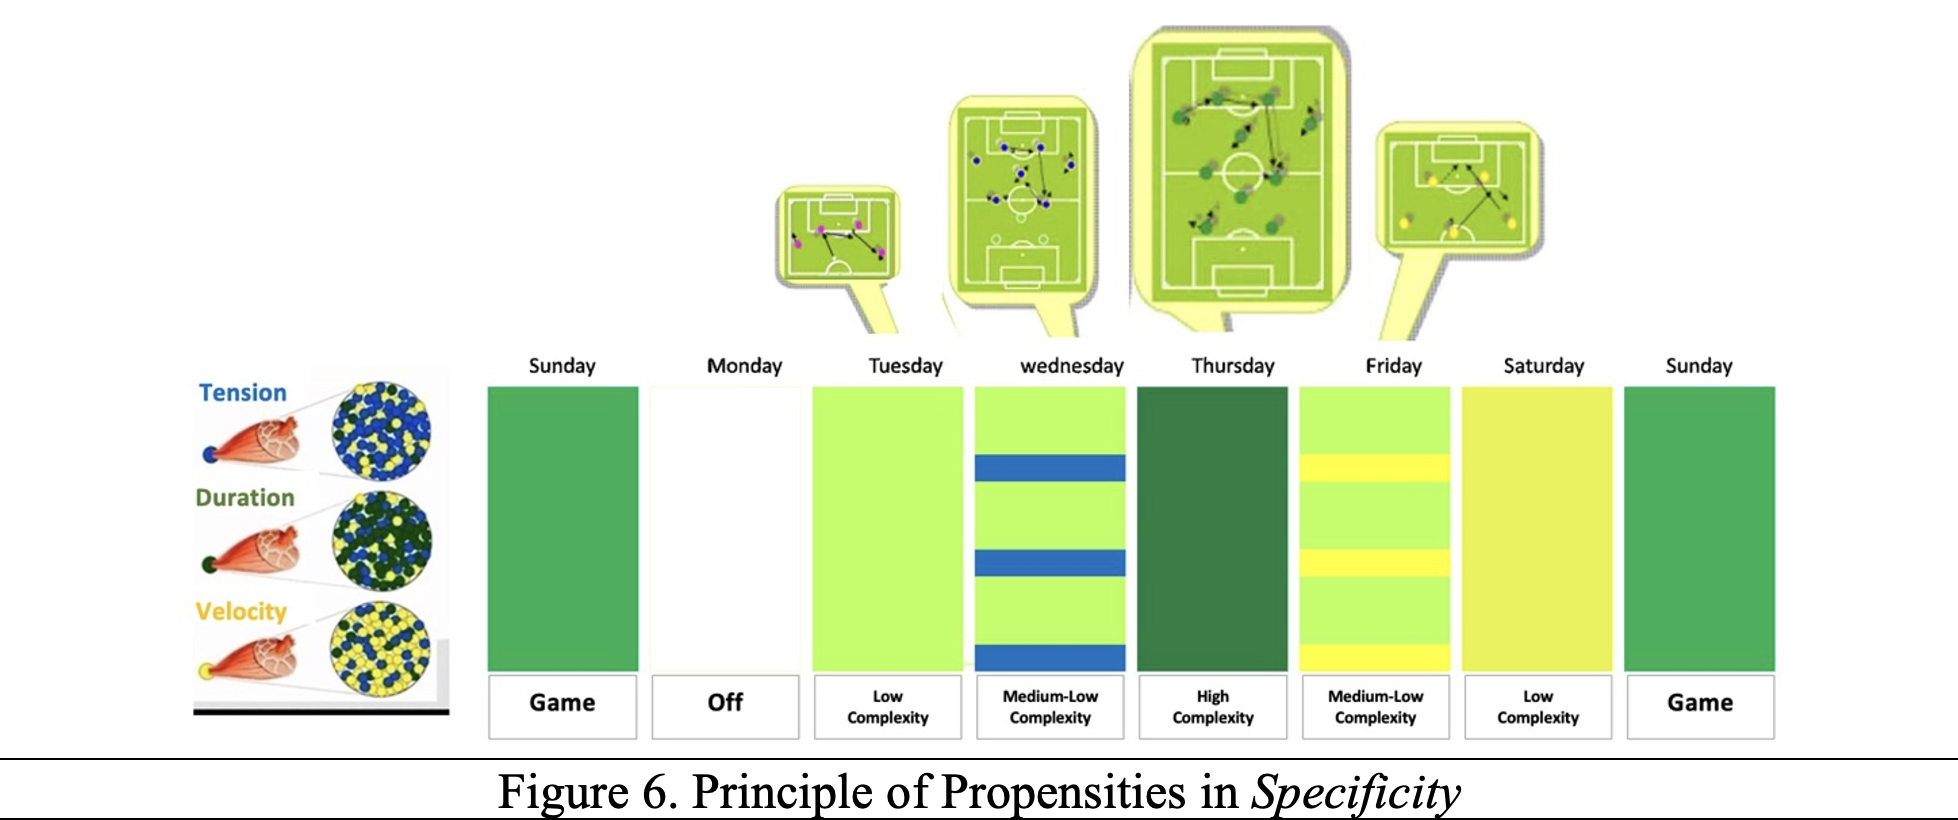 Principle of Propensities in Specificity